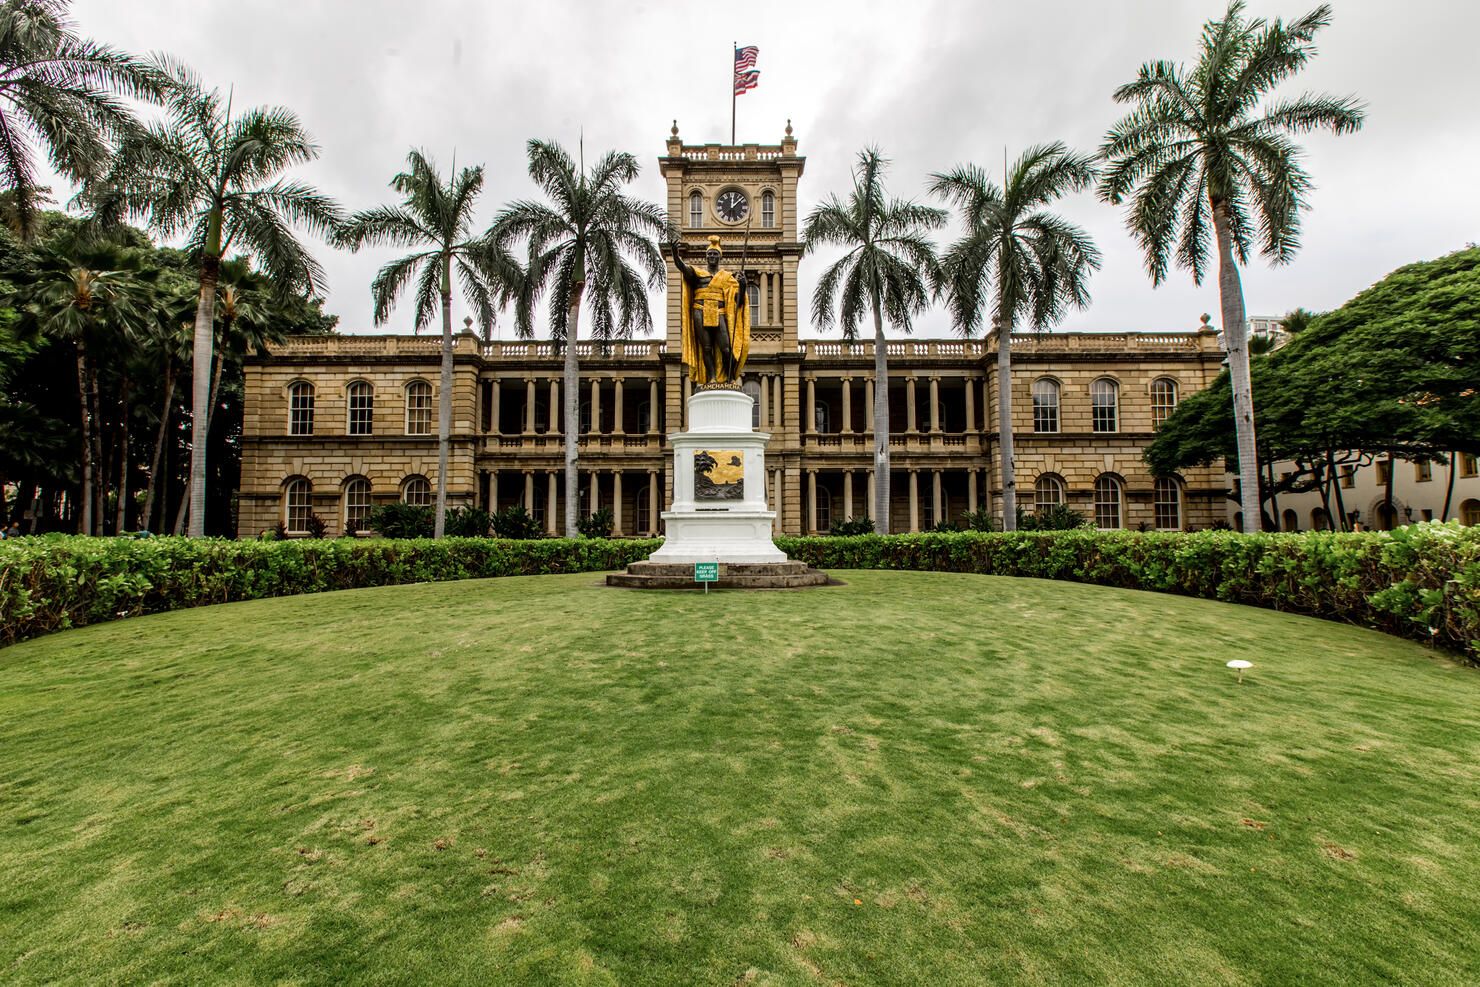 Aliʻiolani Hale building in Hawaii